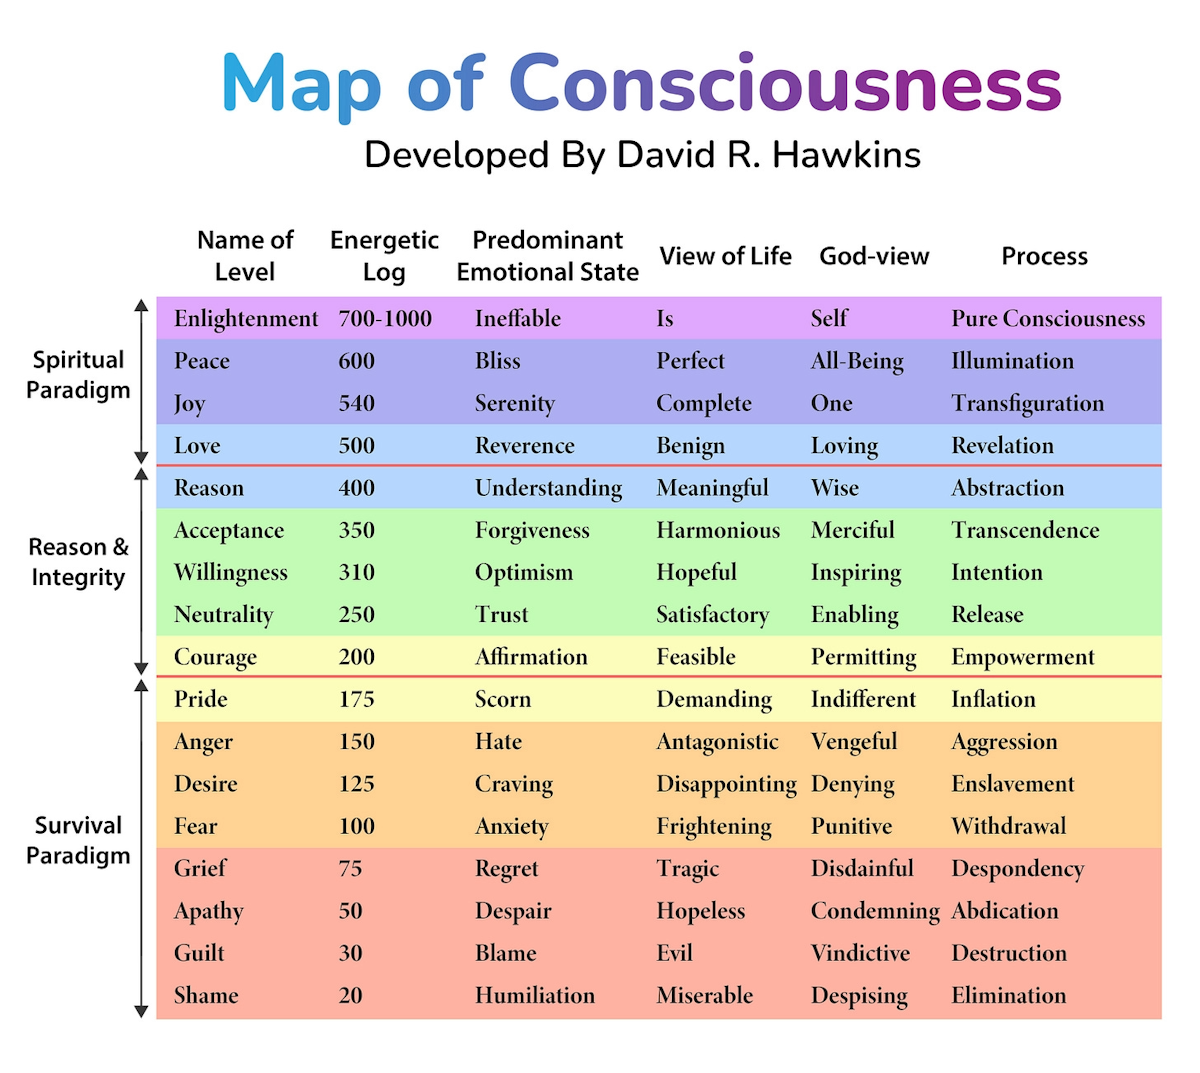 Map of Consciousness